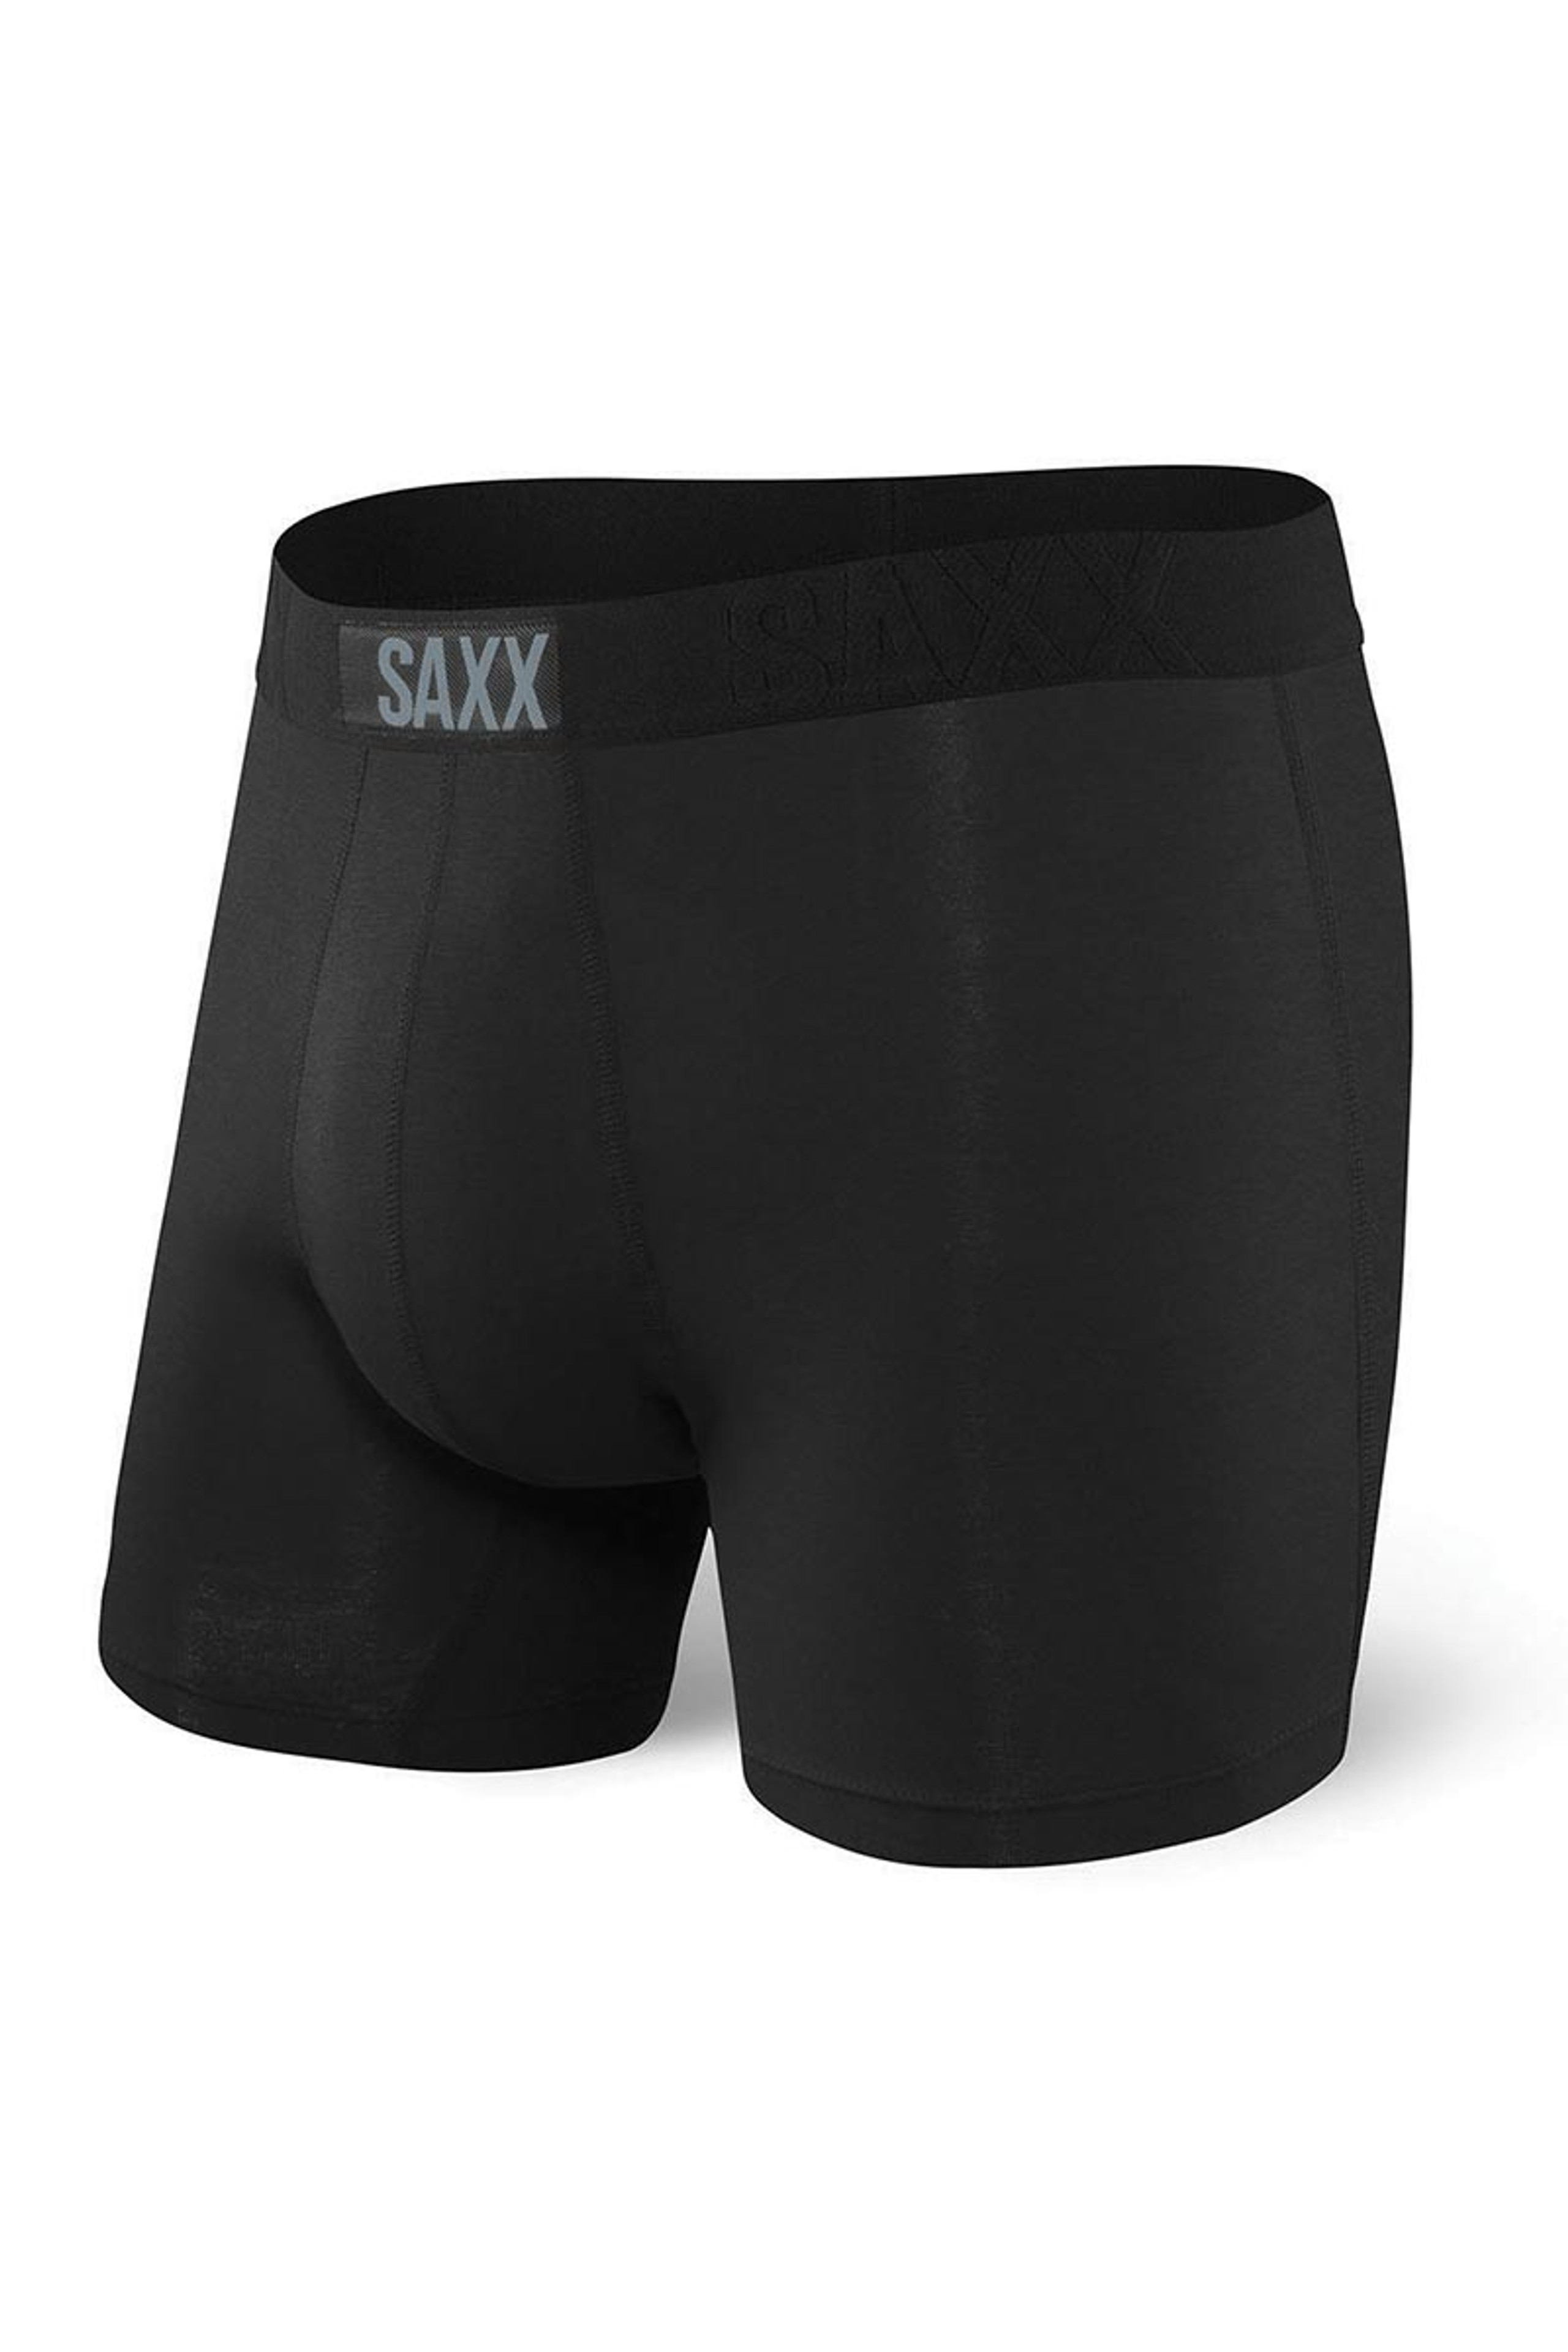 Saxx Vibe Boxer Brief Modern Fit SXBM35-BBB | Mens Boxer Briefs ...